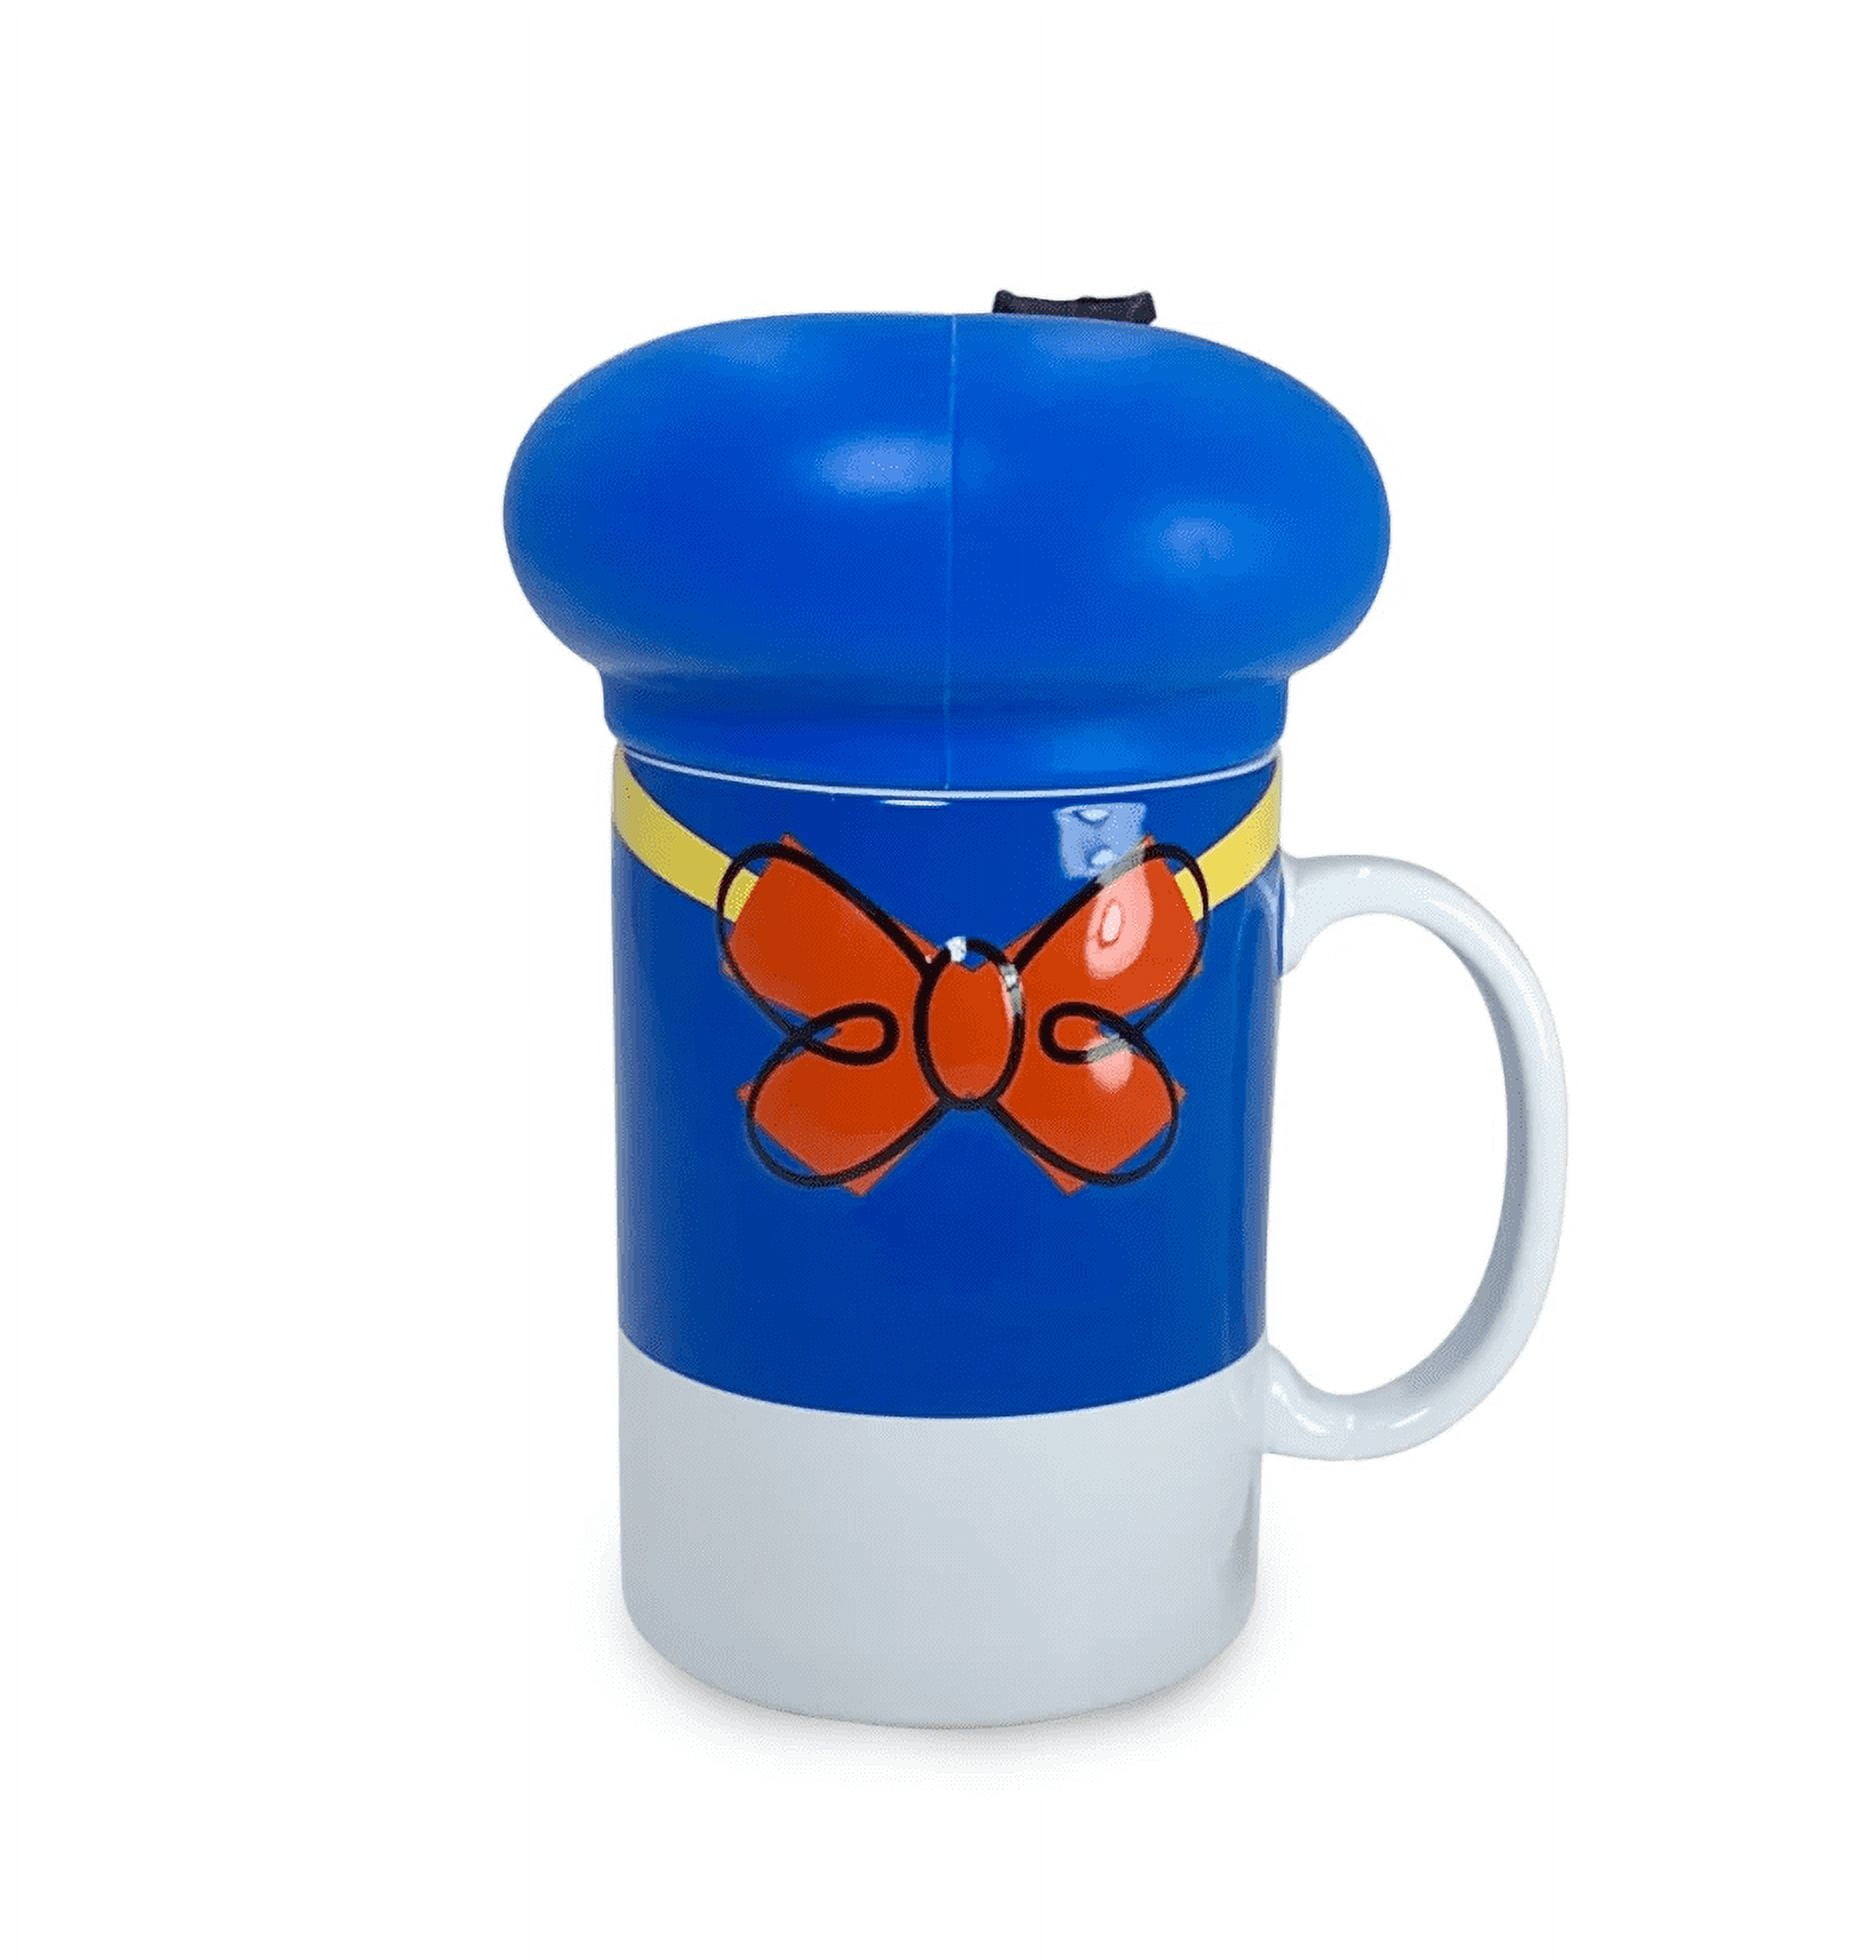 RALME Disney Donald Duck Mug, Large 16 oz. Ceramic Tea or Coffee Cup